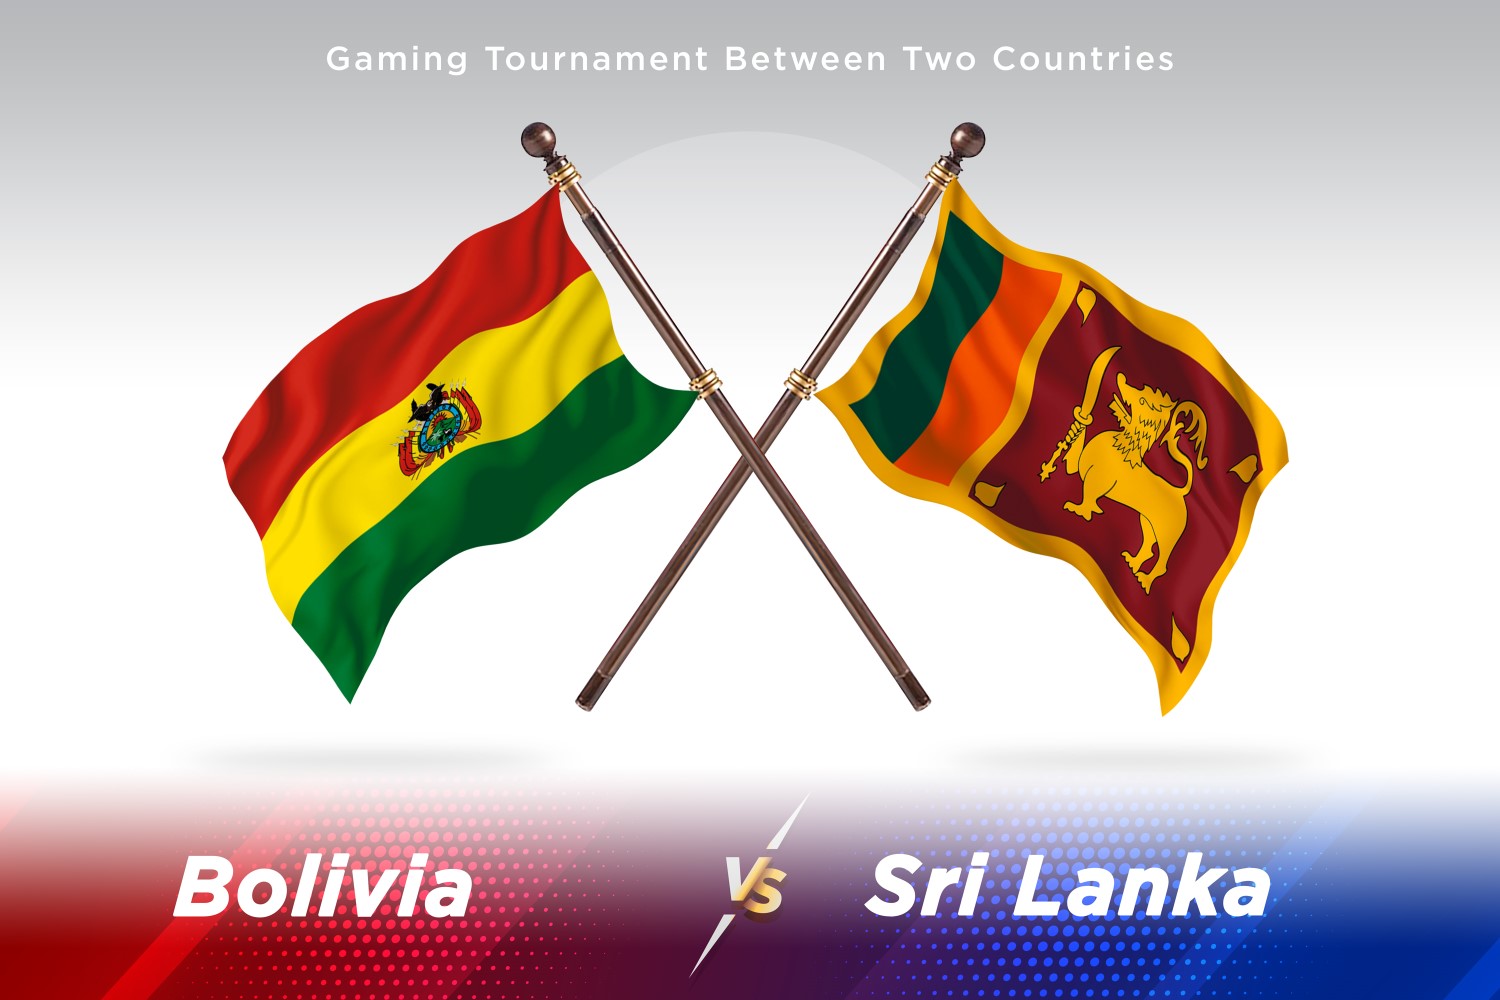 Bolivia versus Sri Lanka Two Flags